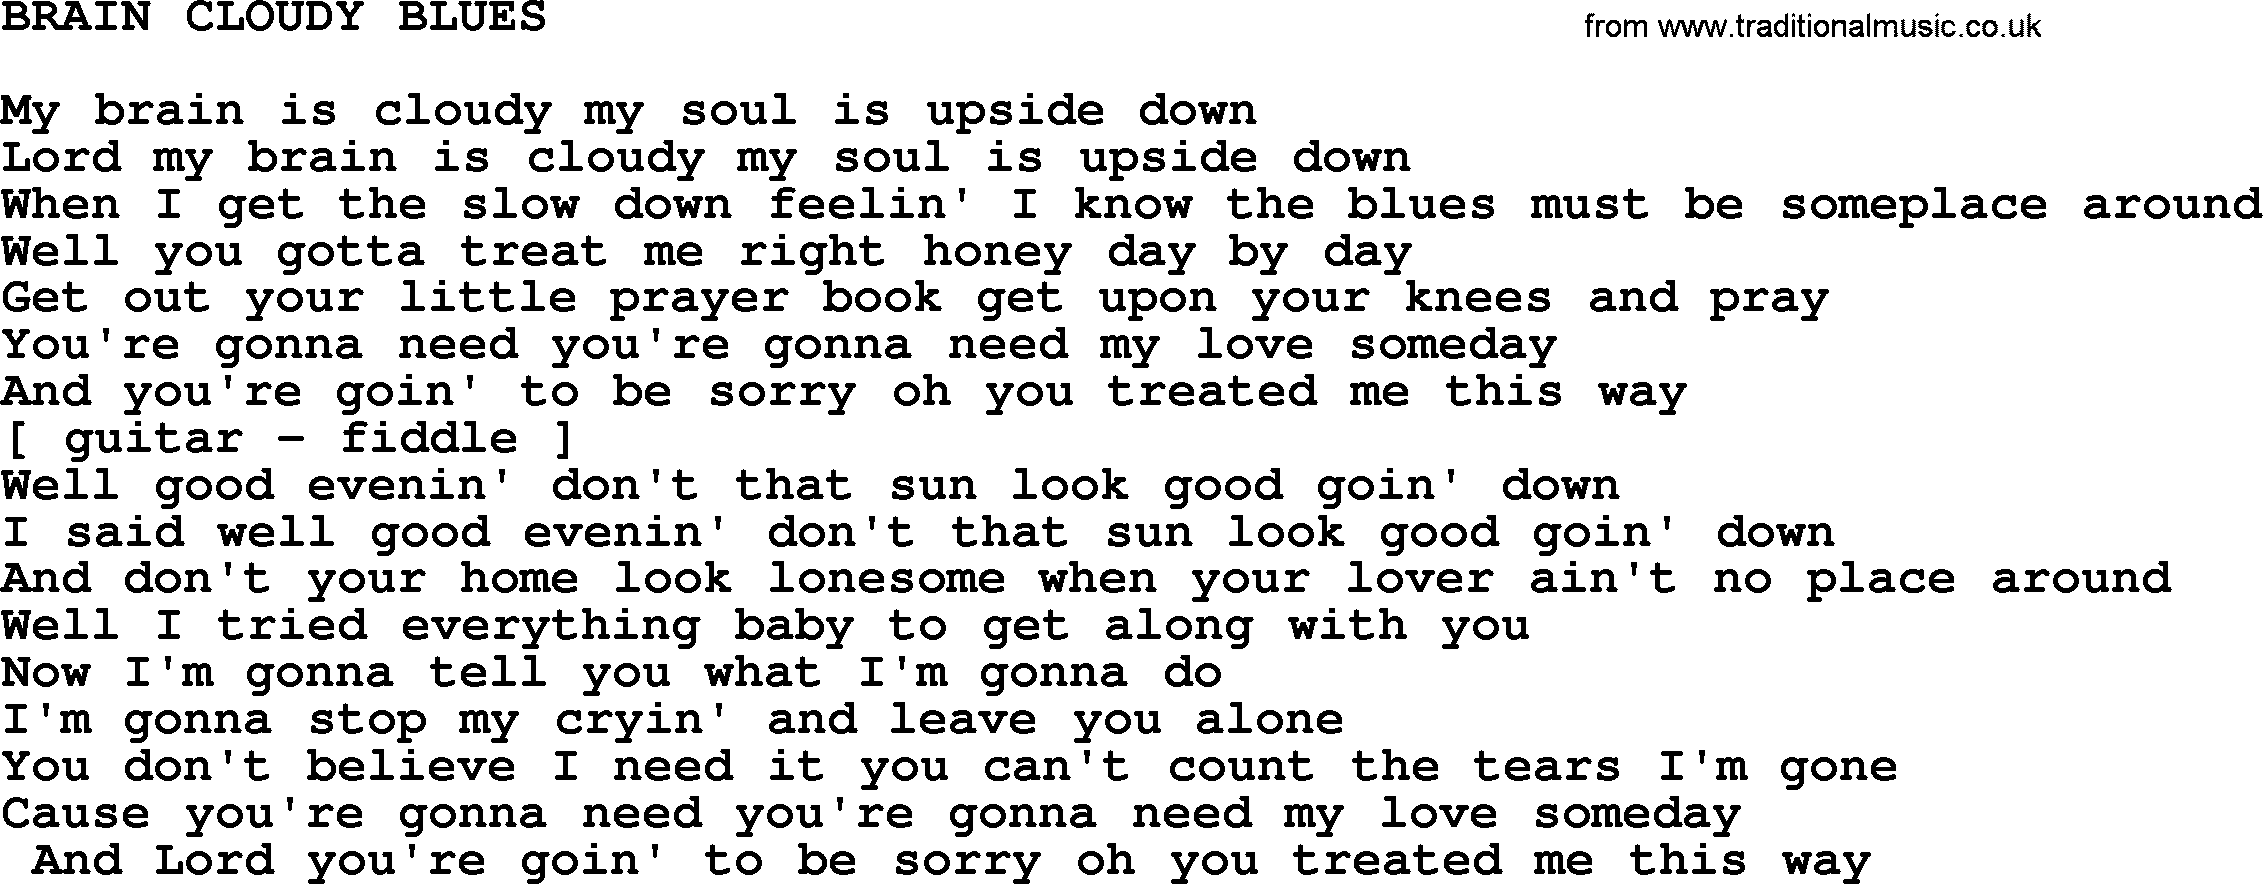 Merle Haggard song: Brain Cloudy Blues, lyrics.